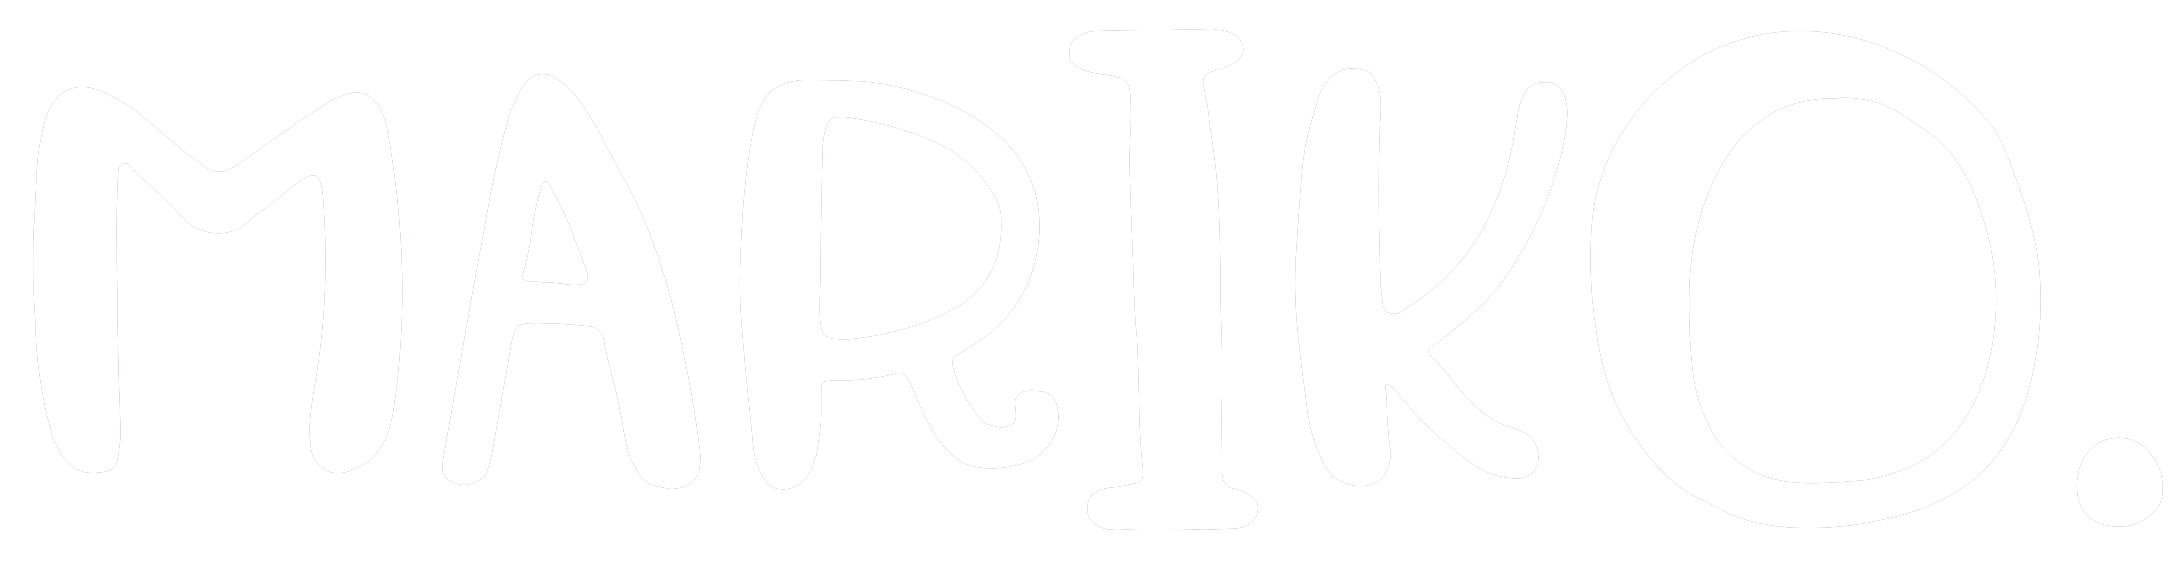 mariko-logo-trans-white-plain